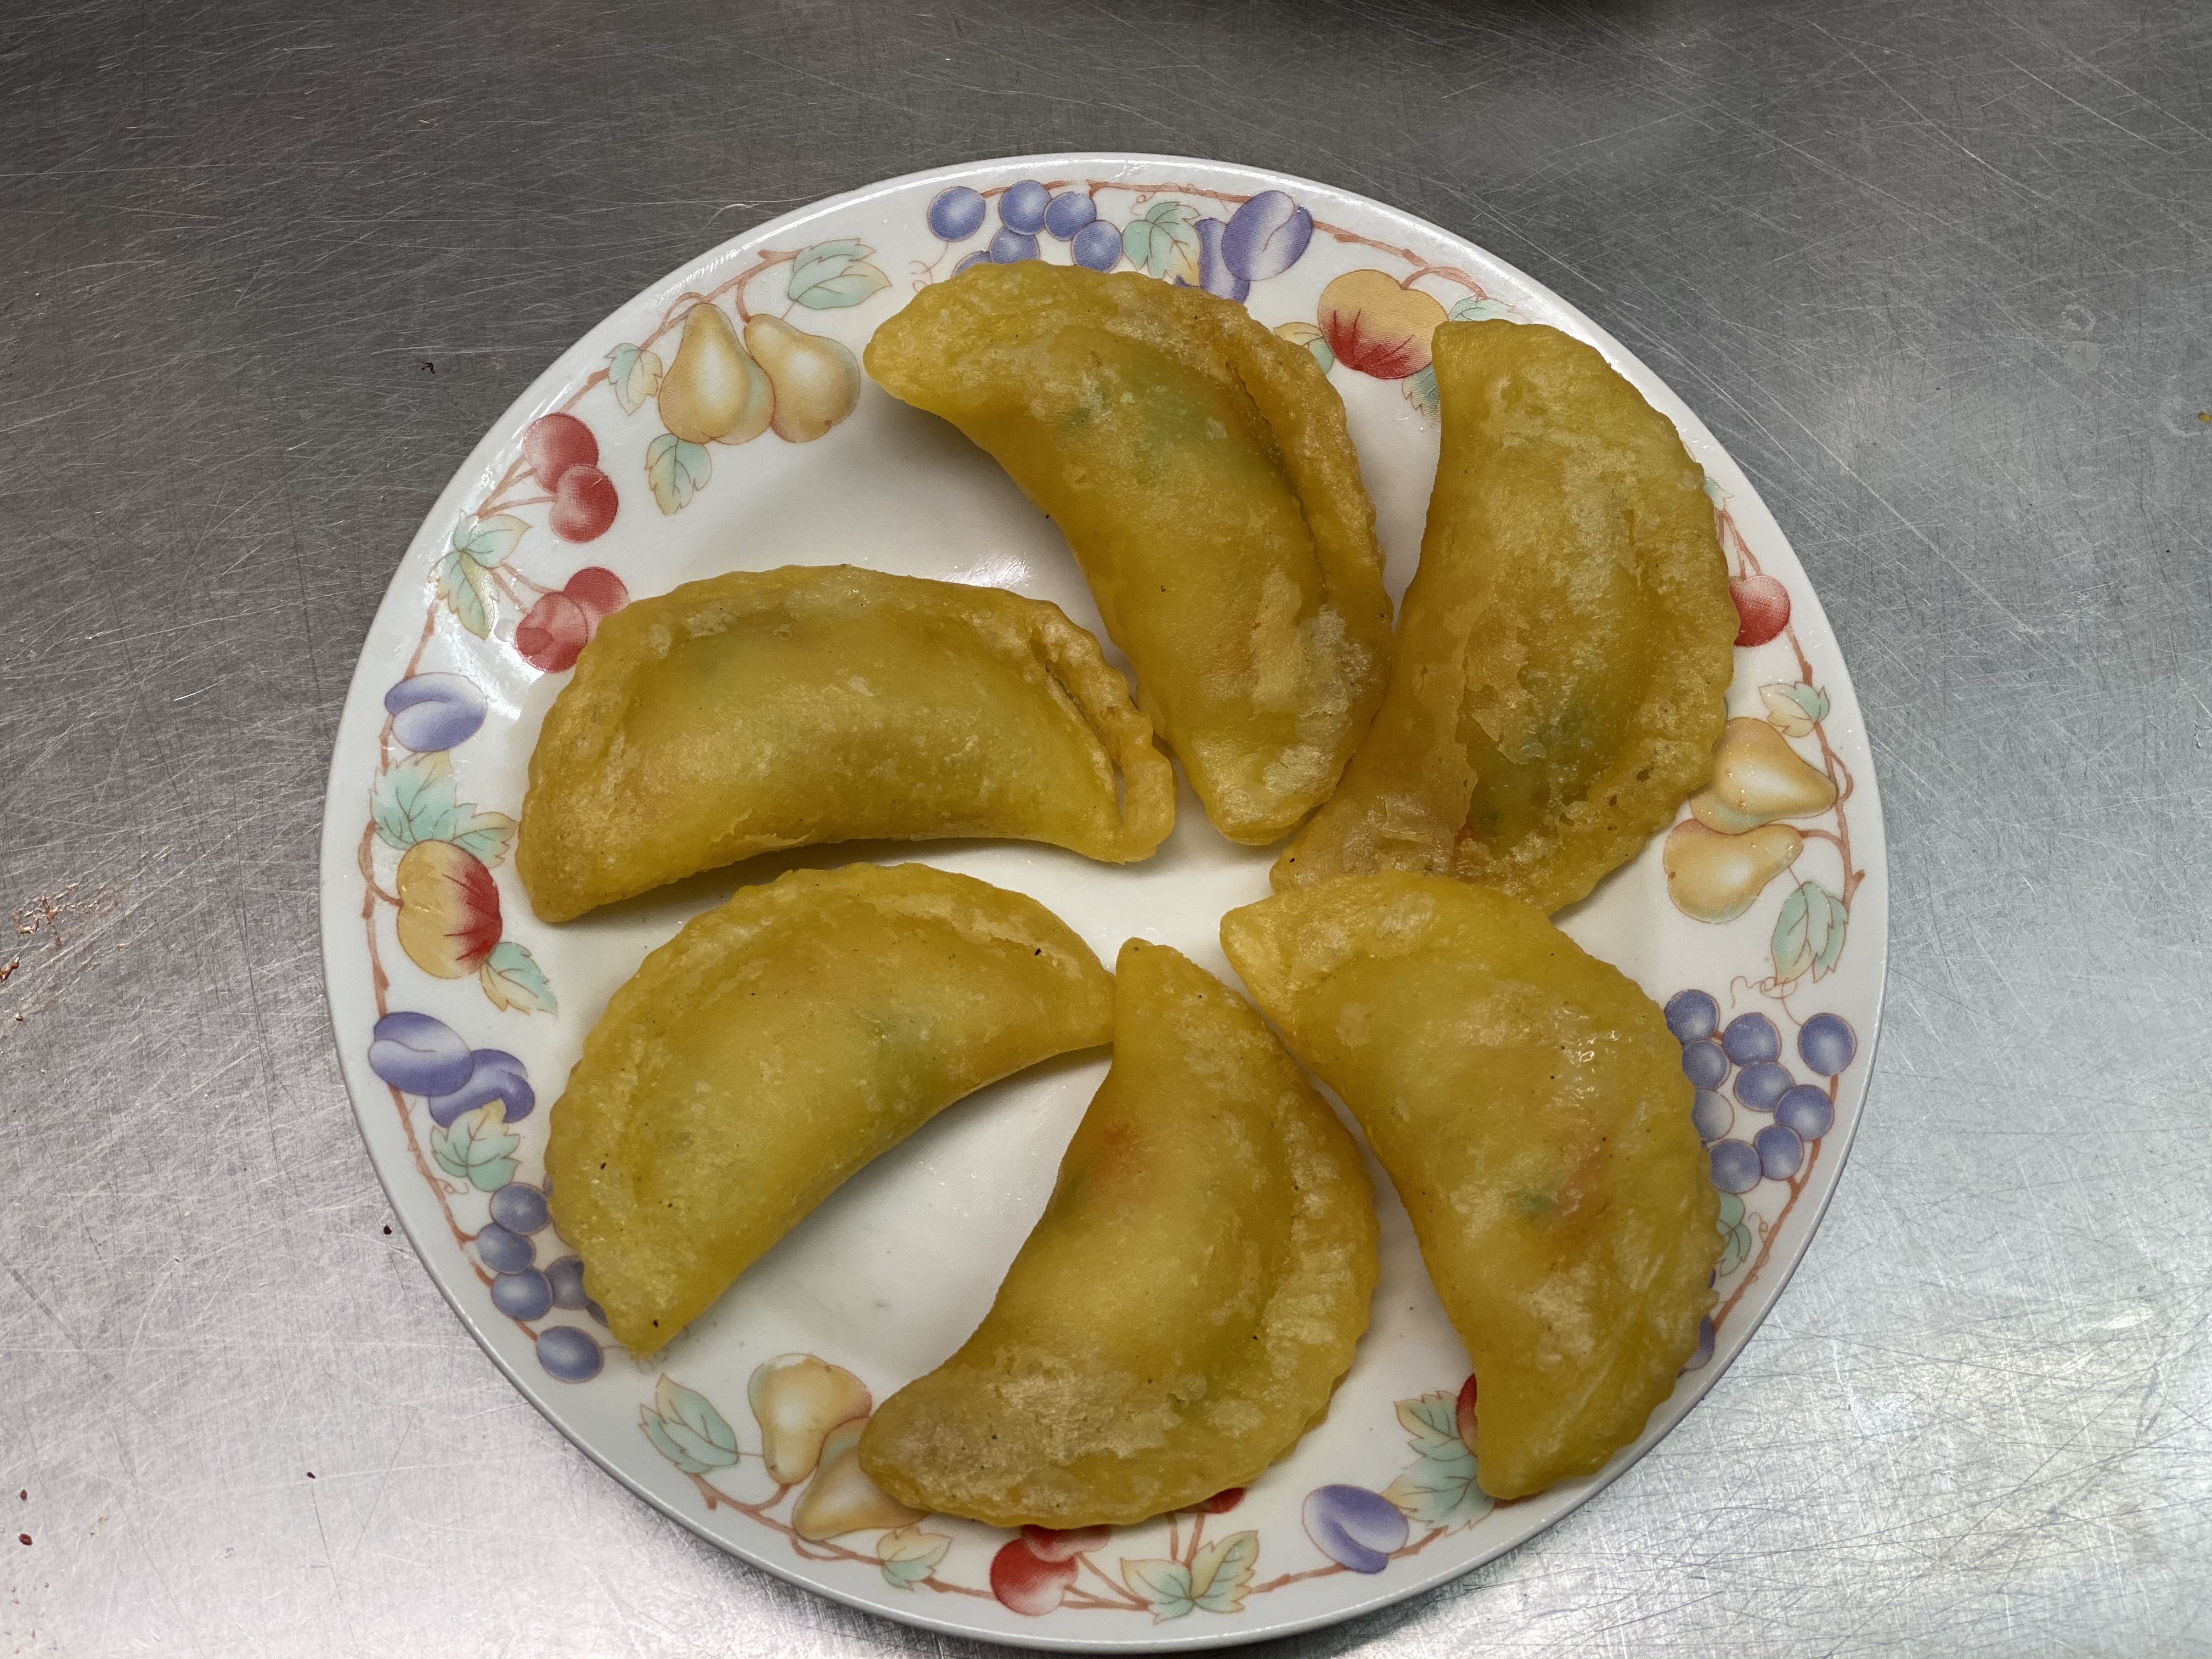 Crispy brown dumplings lay on a white plate.